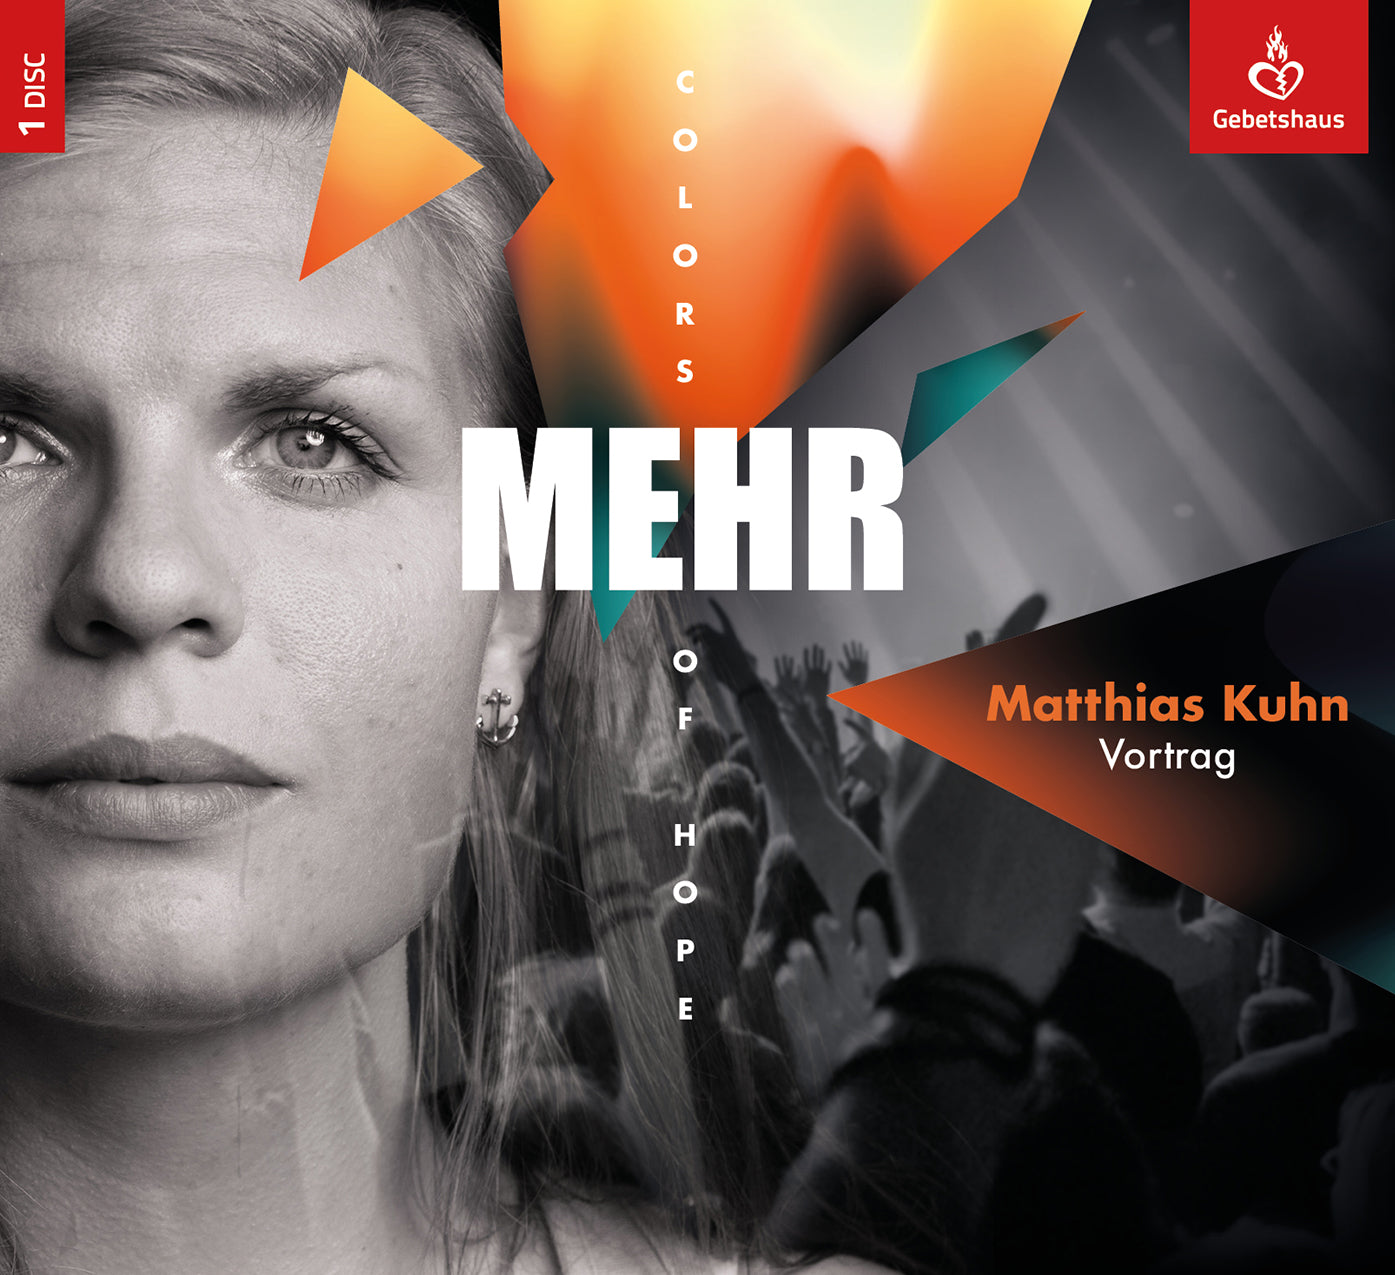 Matthias Kuhn - MEHR 2020 | CD - Gebetshaus Augsburg | Shop